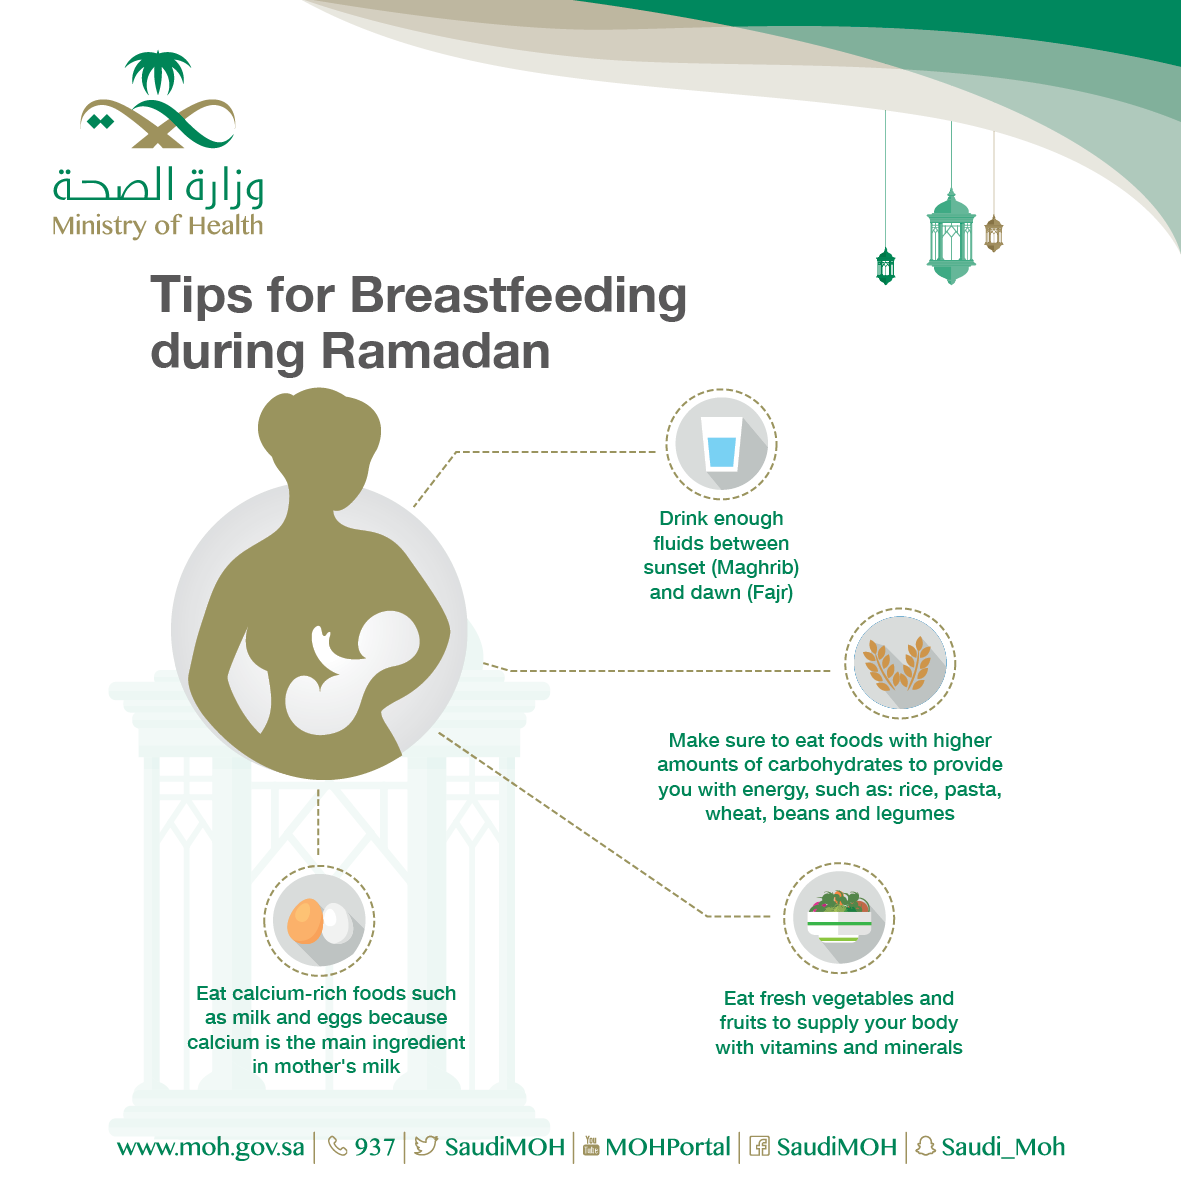 Breastfeeding during Ramadan